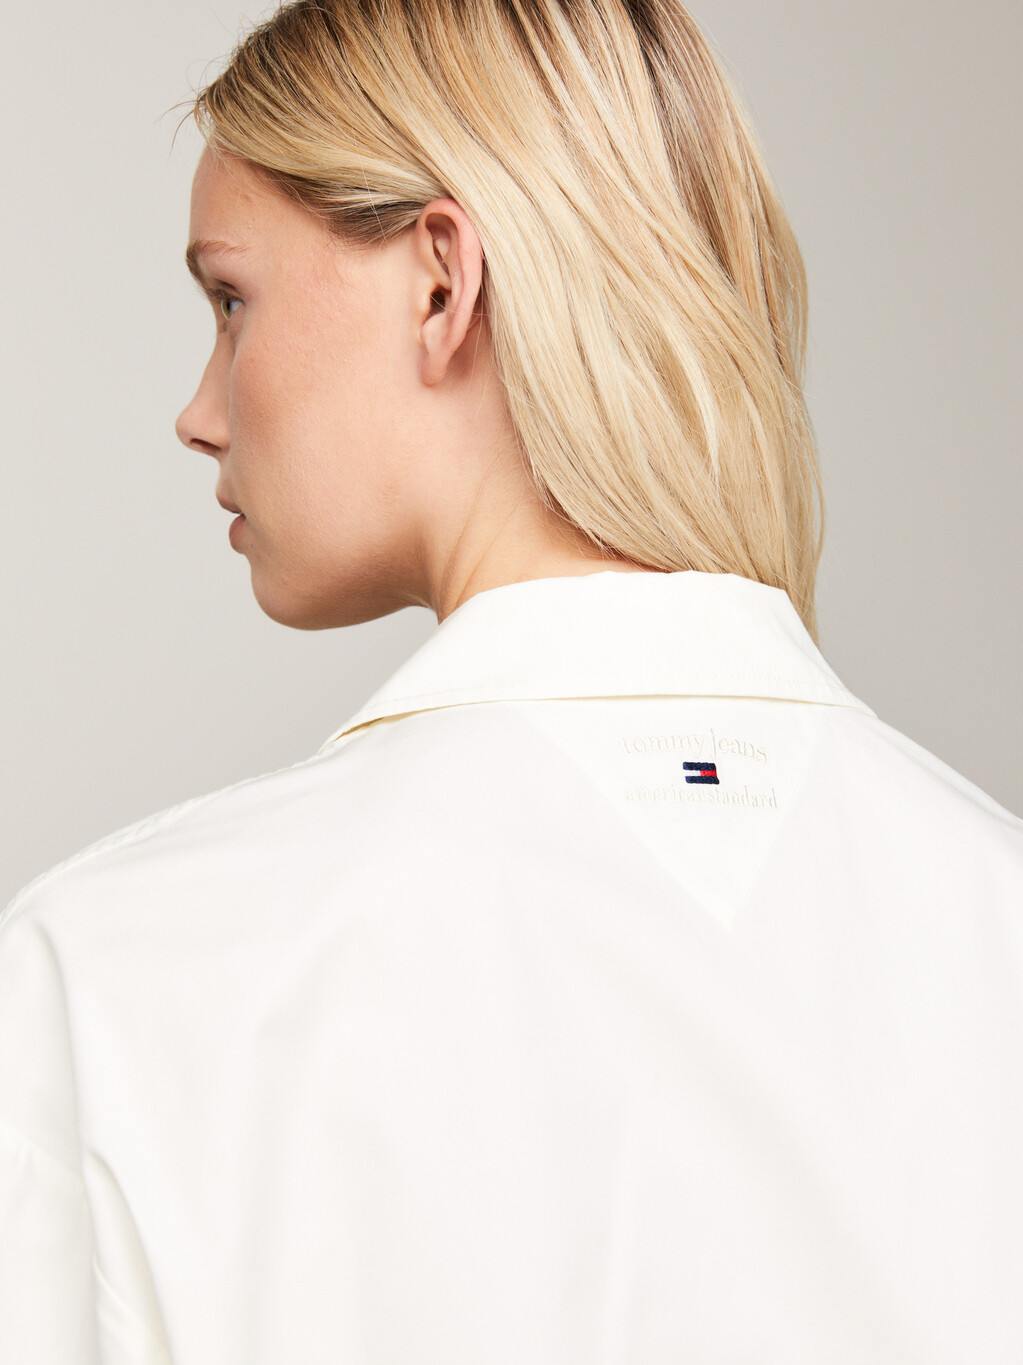 Dual Gender Boxy Cropped Short Sleeve Shirt, Creamy White, hi-res